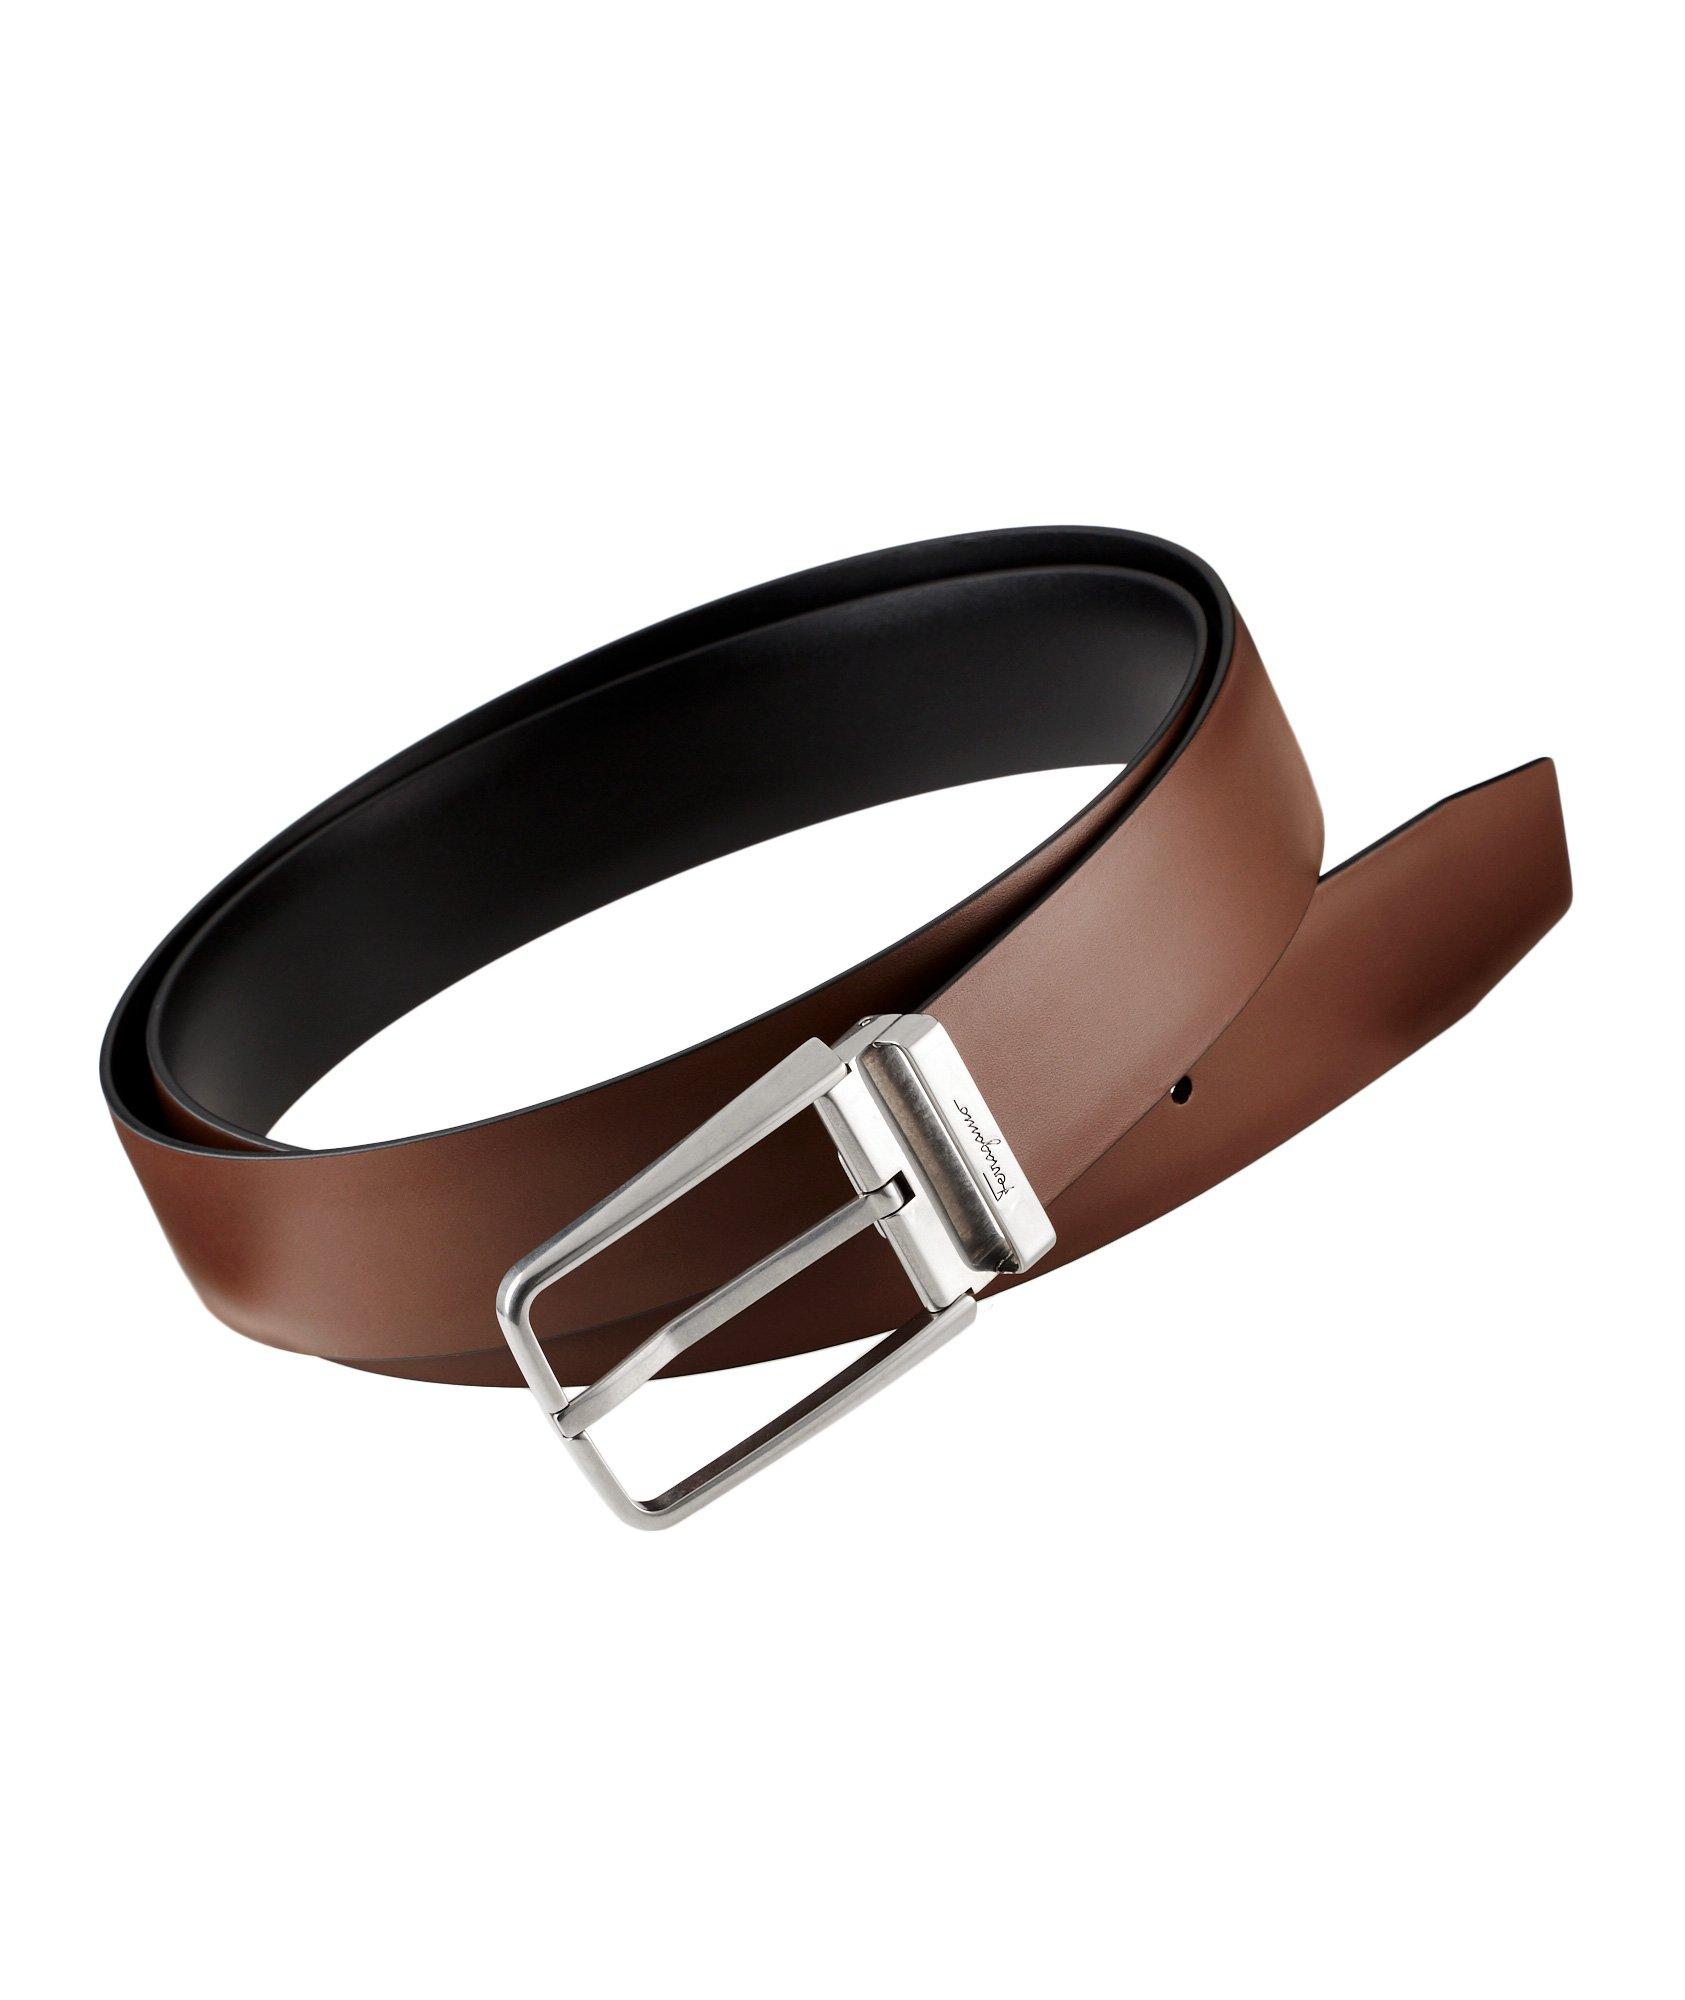 Reversible Leather Belt image 0